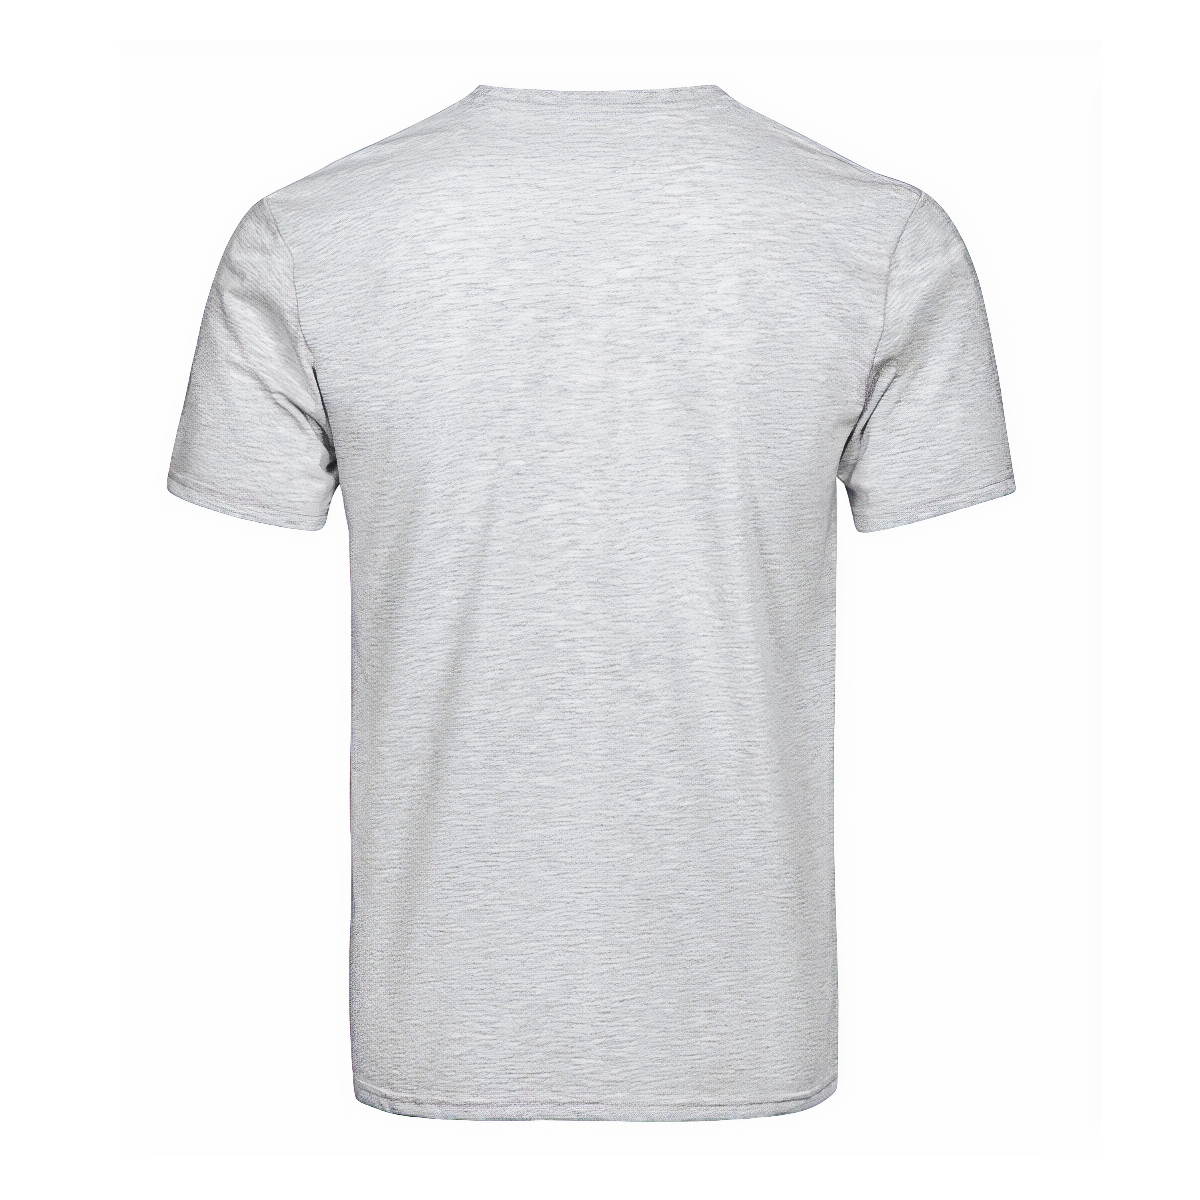 Hamilton Tartan Crest T-shirt - I'm not yelling style